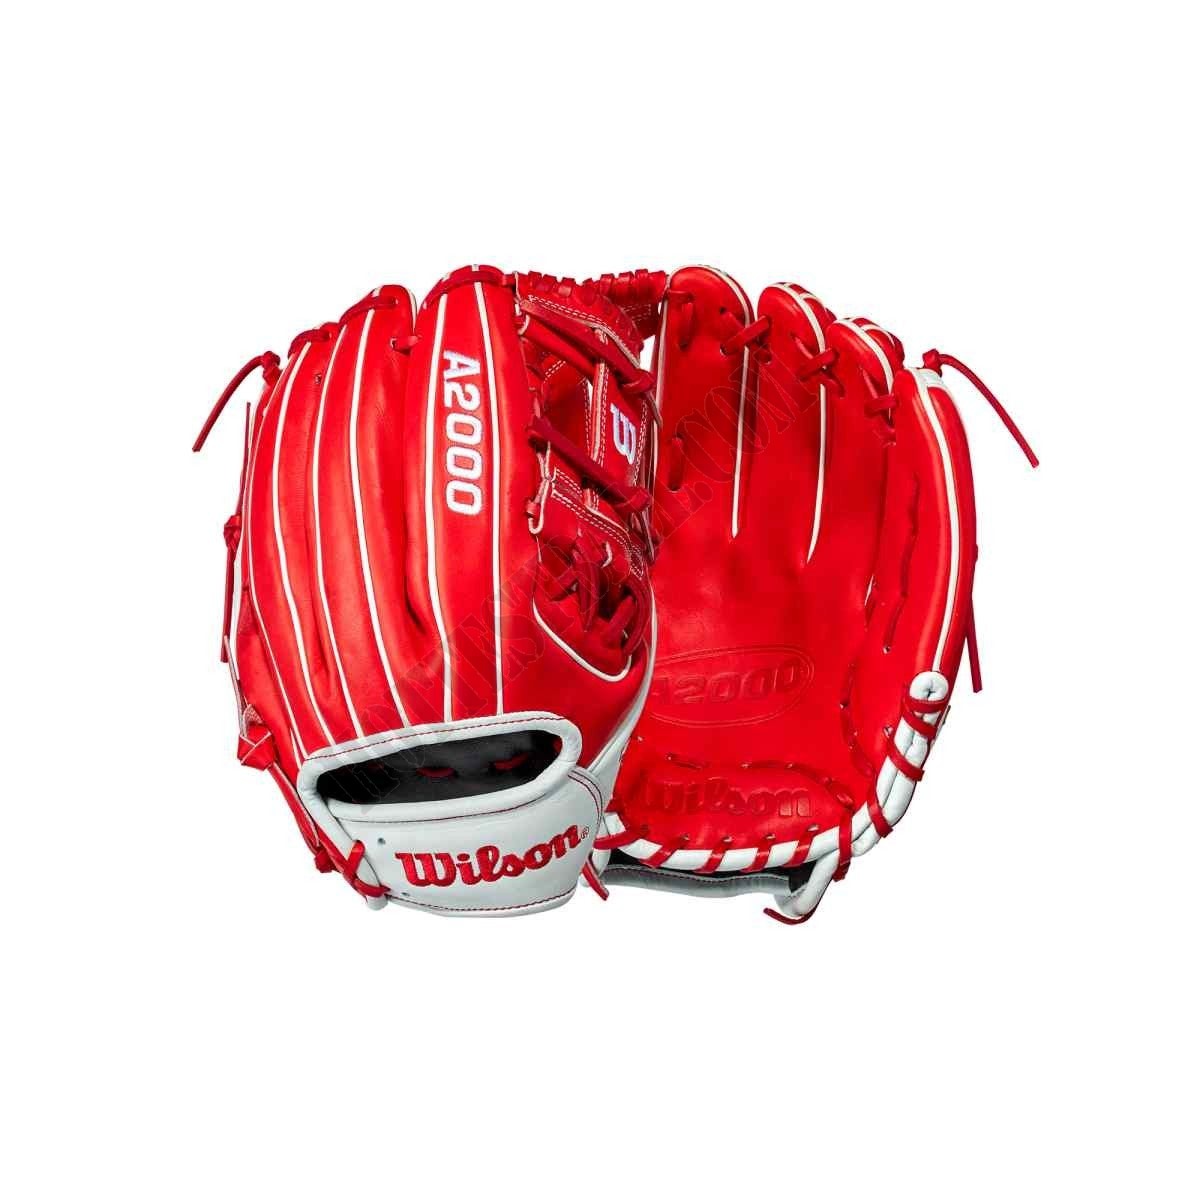 2021 A2000 1786 Canada 11.5" Infield Baseball Glove - Limited Edition ● Wilson Promotions - 2021 A2000 1786 Canada 11.5" Infield Baseball Glove - Limited Edition ● Wilson Promotions